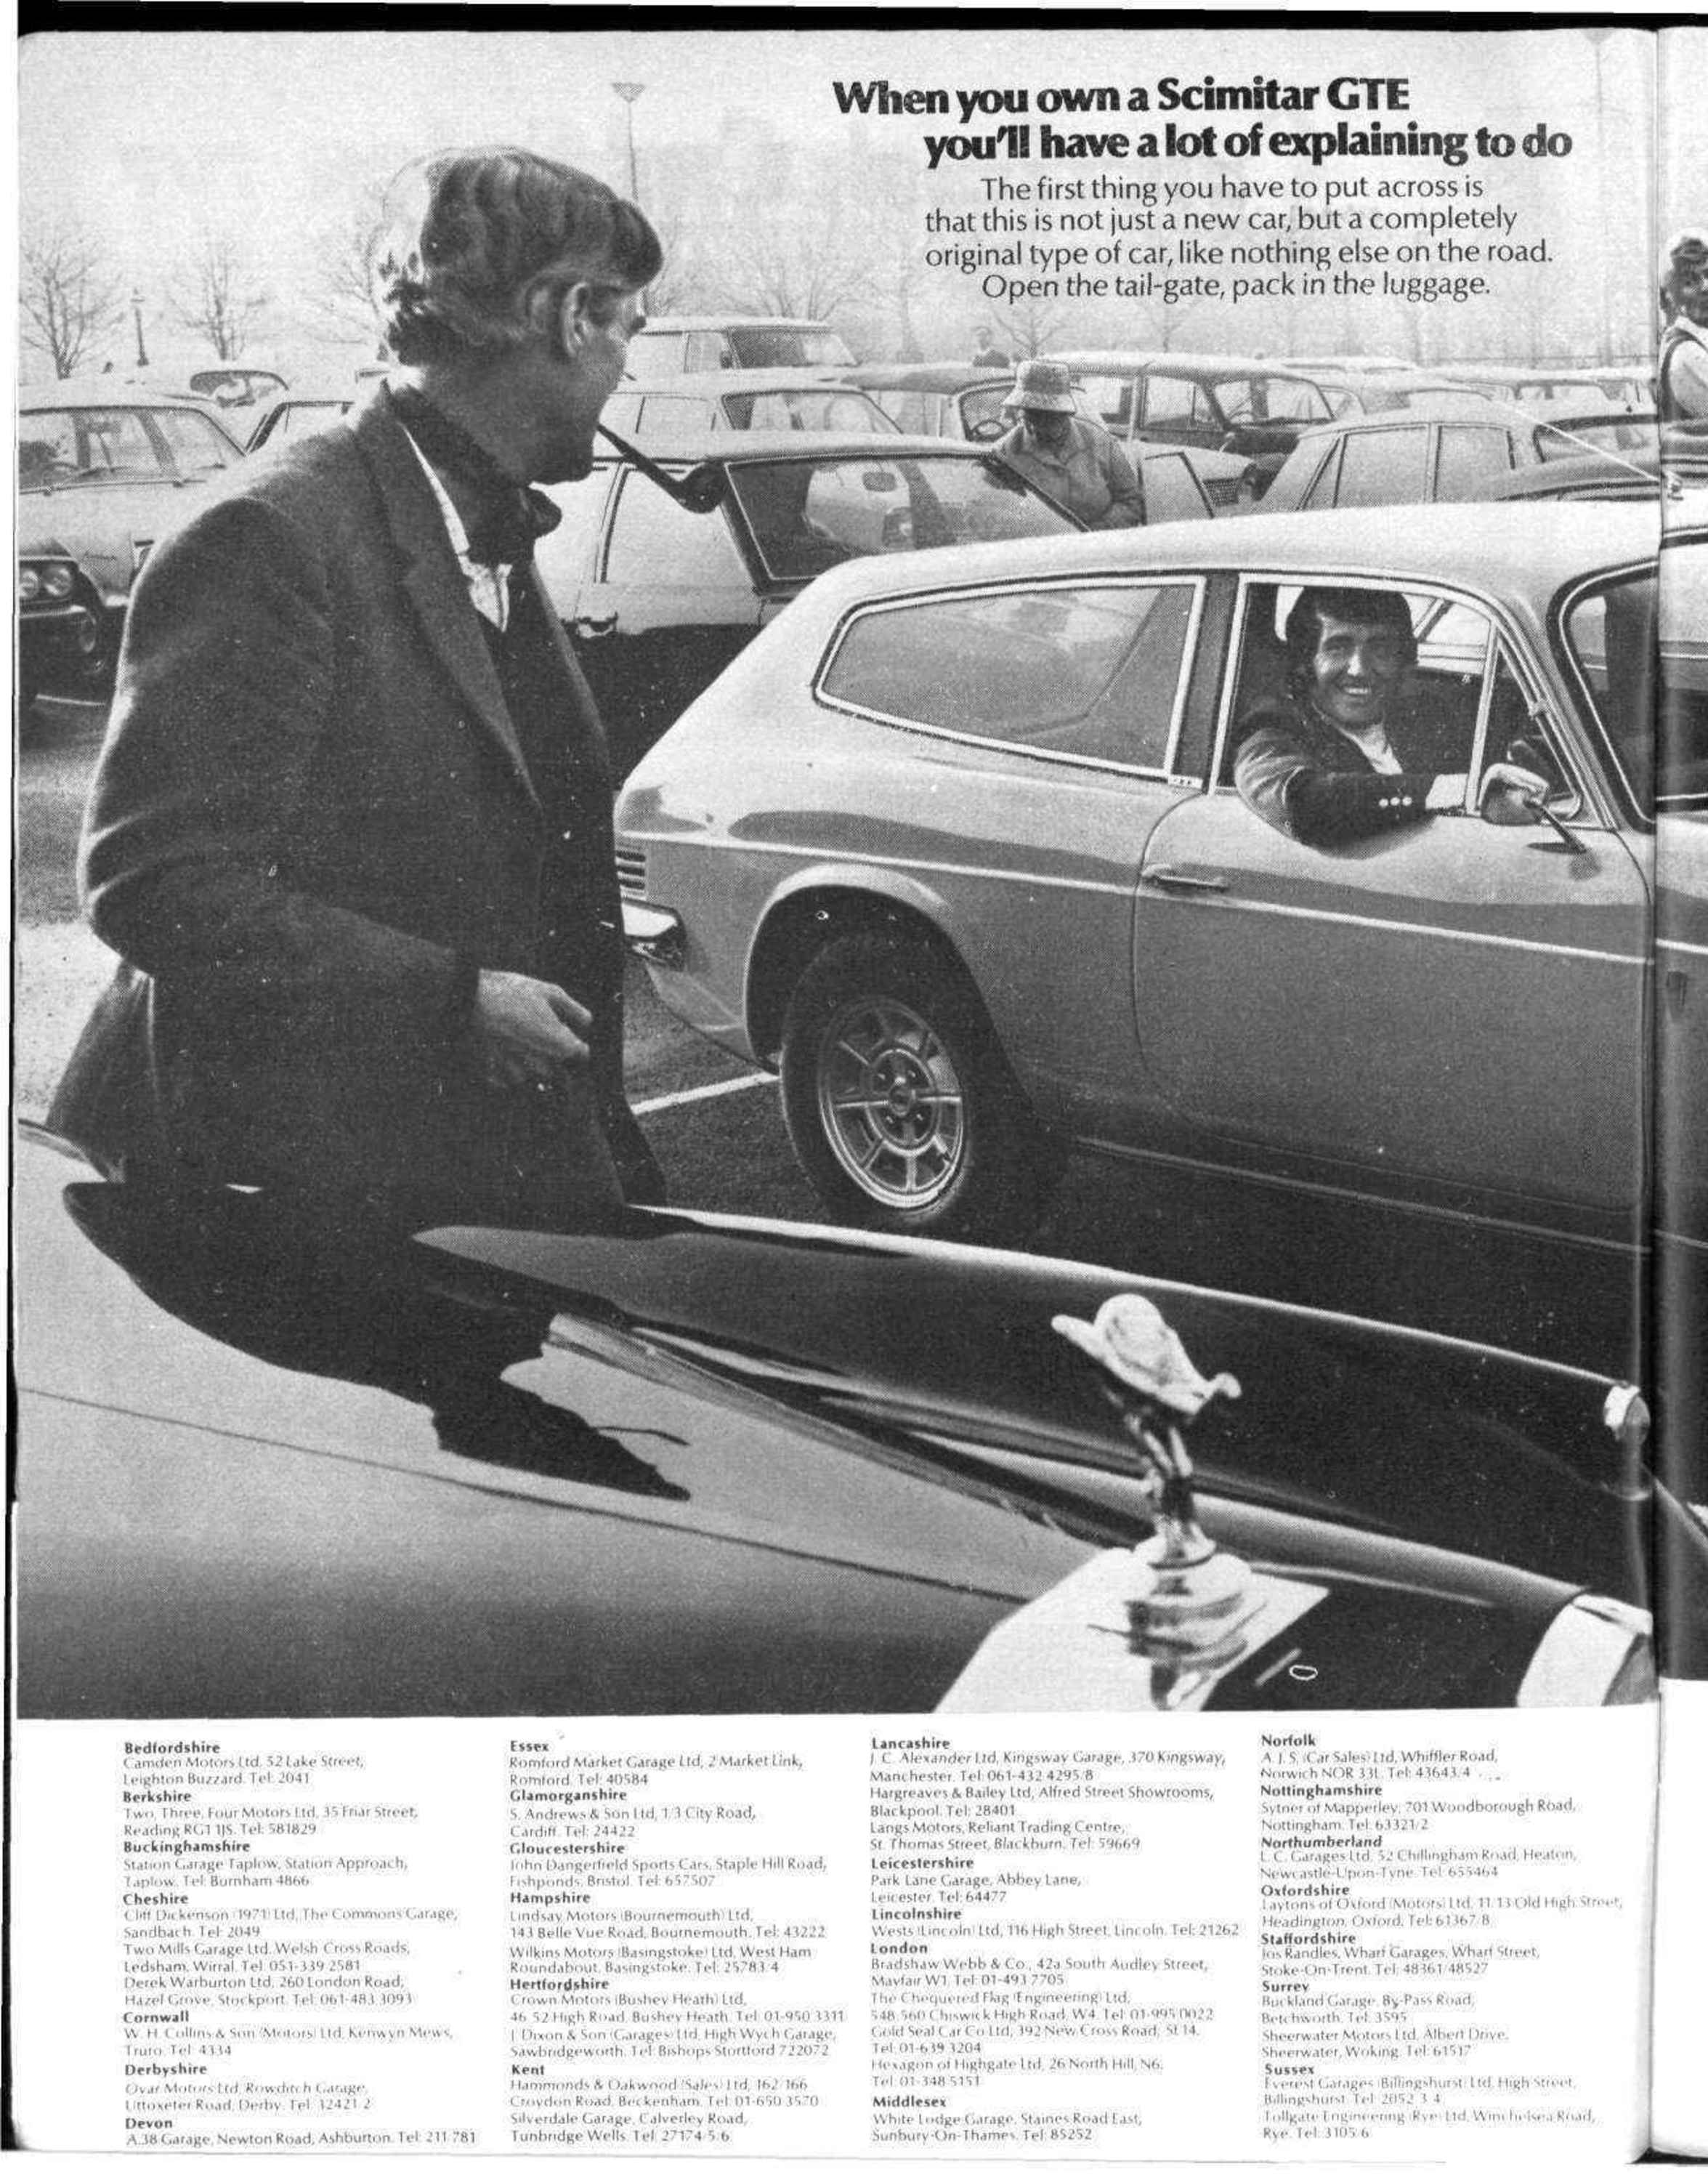 MG Midget versus Clan March 1973 - Motor Sport Magazine